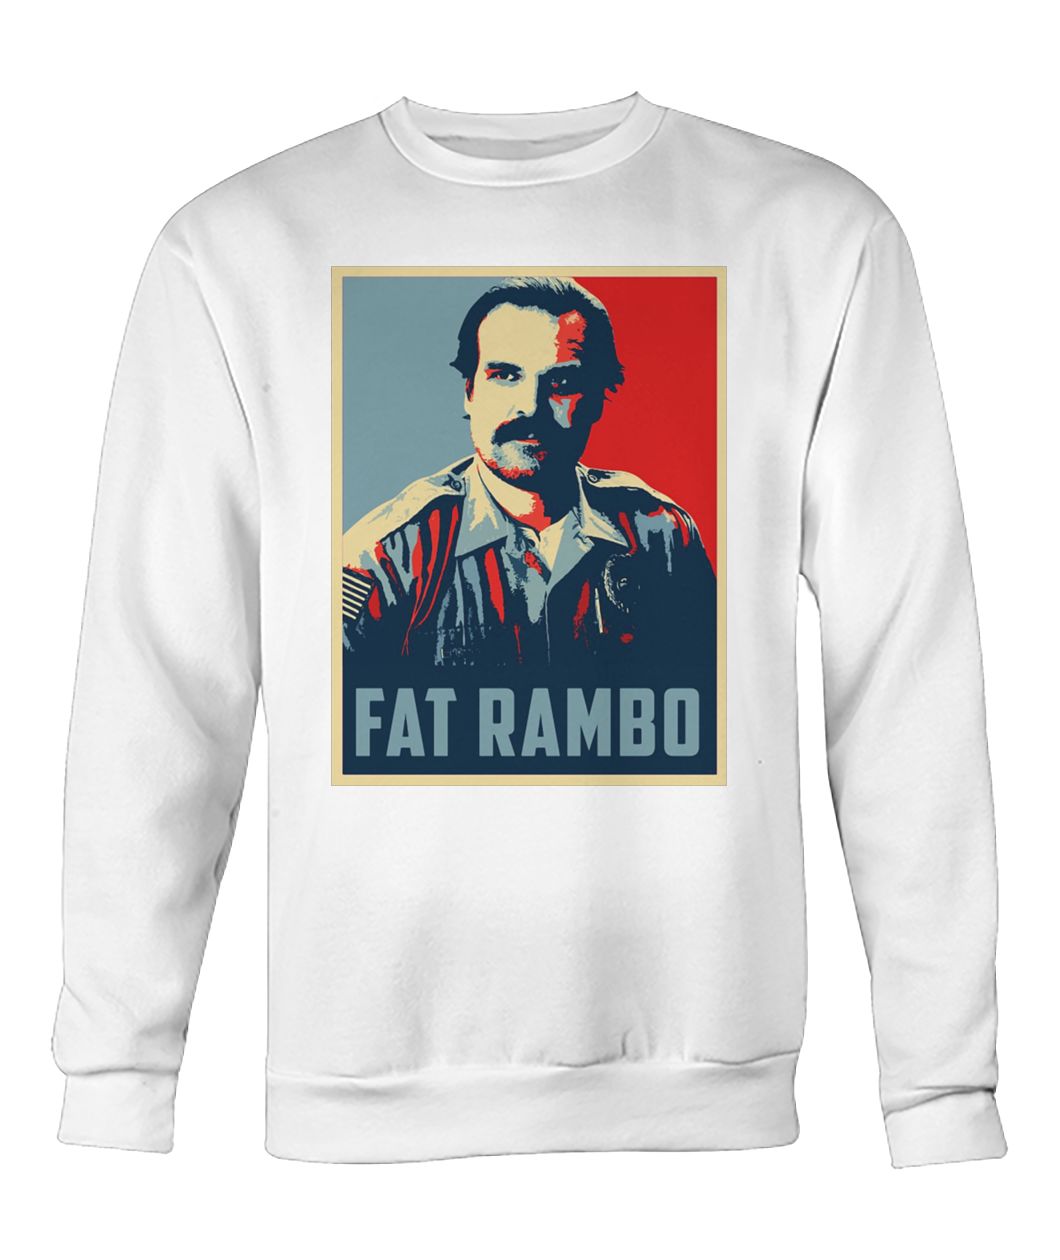 Stranger things 3 jim hopper fat rambo crew neck sweatshirt